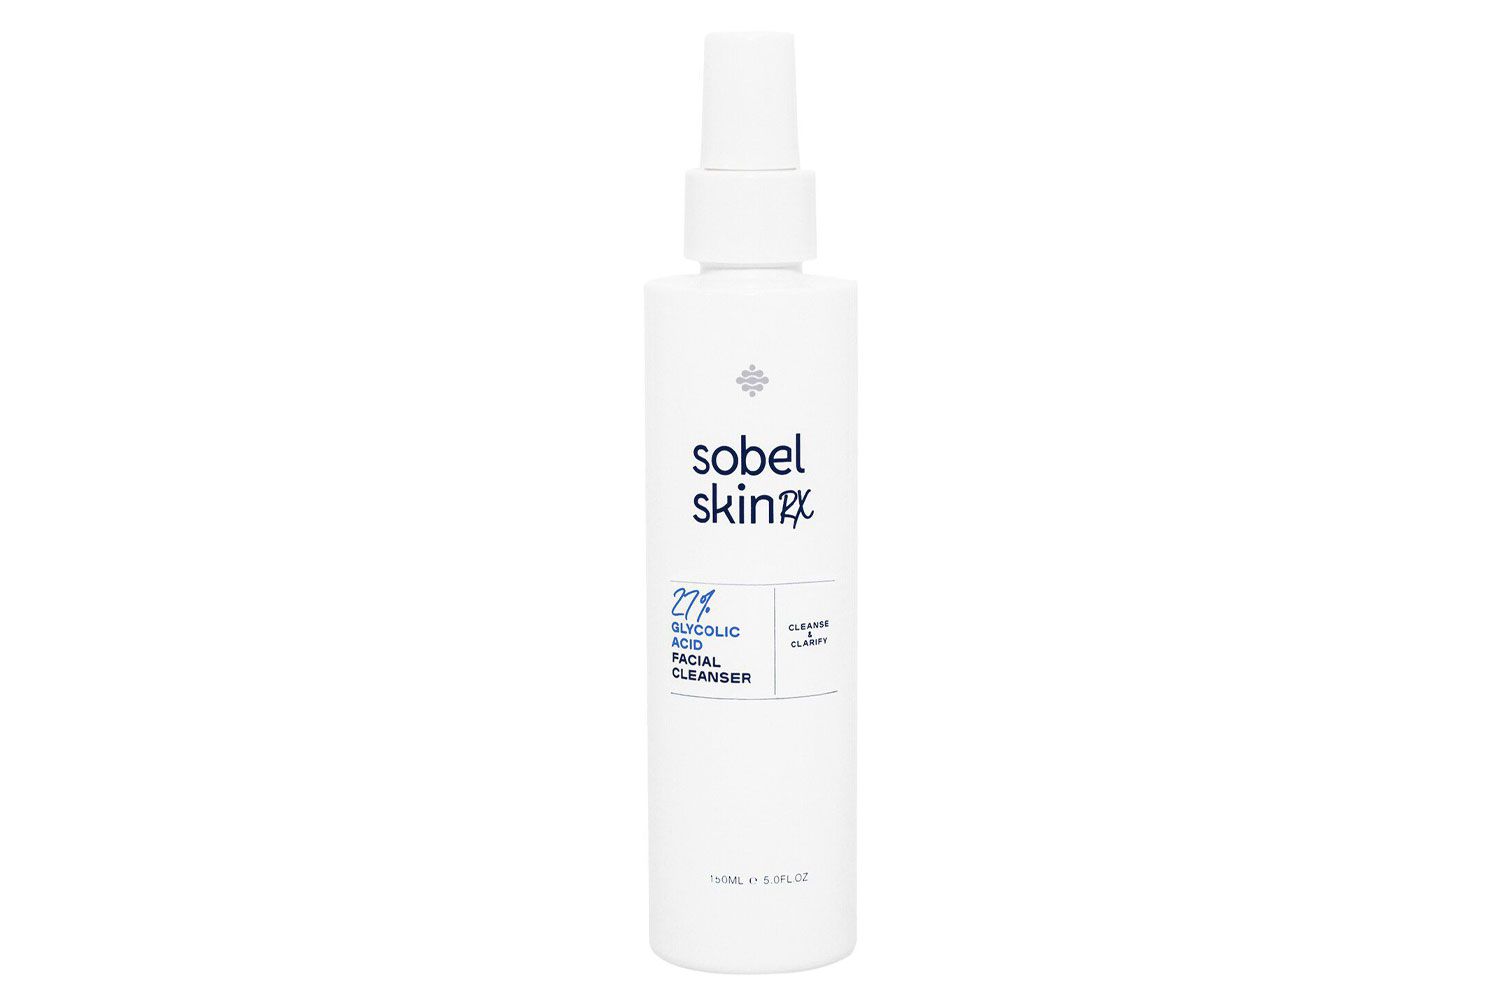 SOBEBL SKIN RX 27% de limpeza facial com ácido glicólico